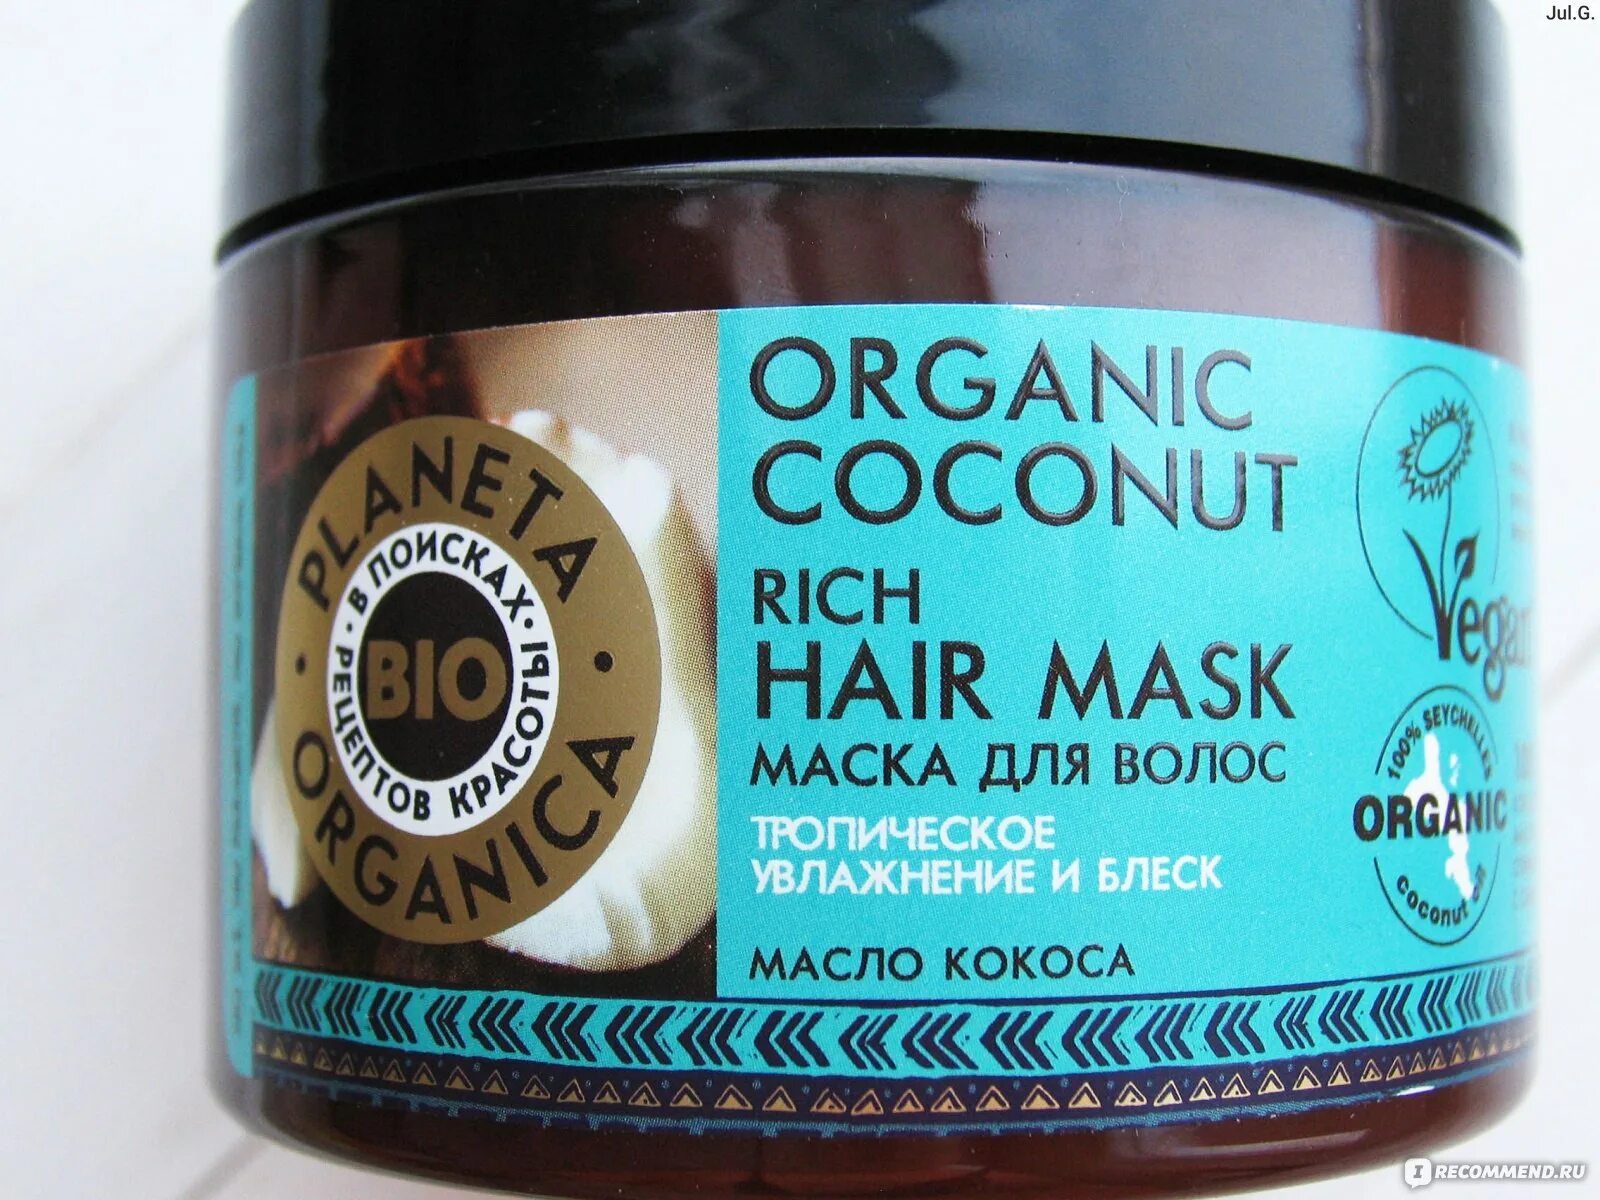 Маски для волос планета. Планета органика маска для волос. Planeta Organika маска для волос. Planeta Organica маска кокосовая. Planeta Organica Eco маска для лица.